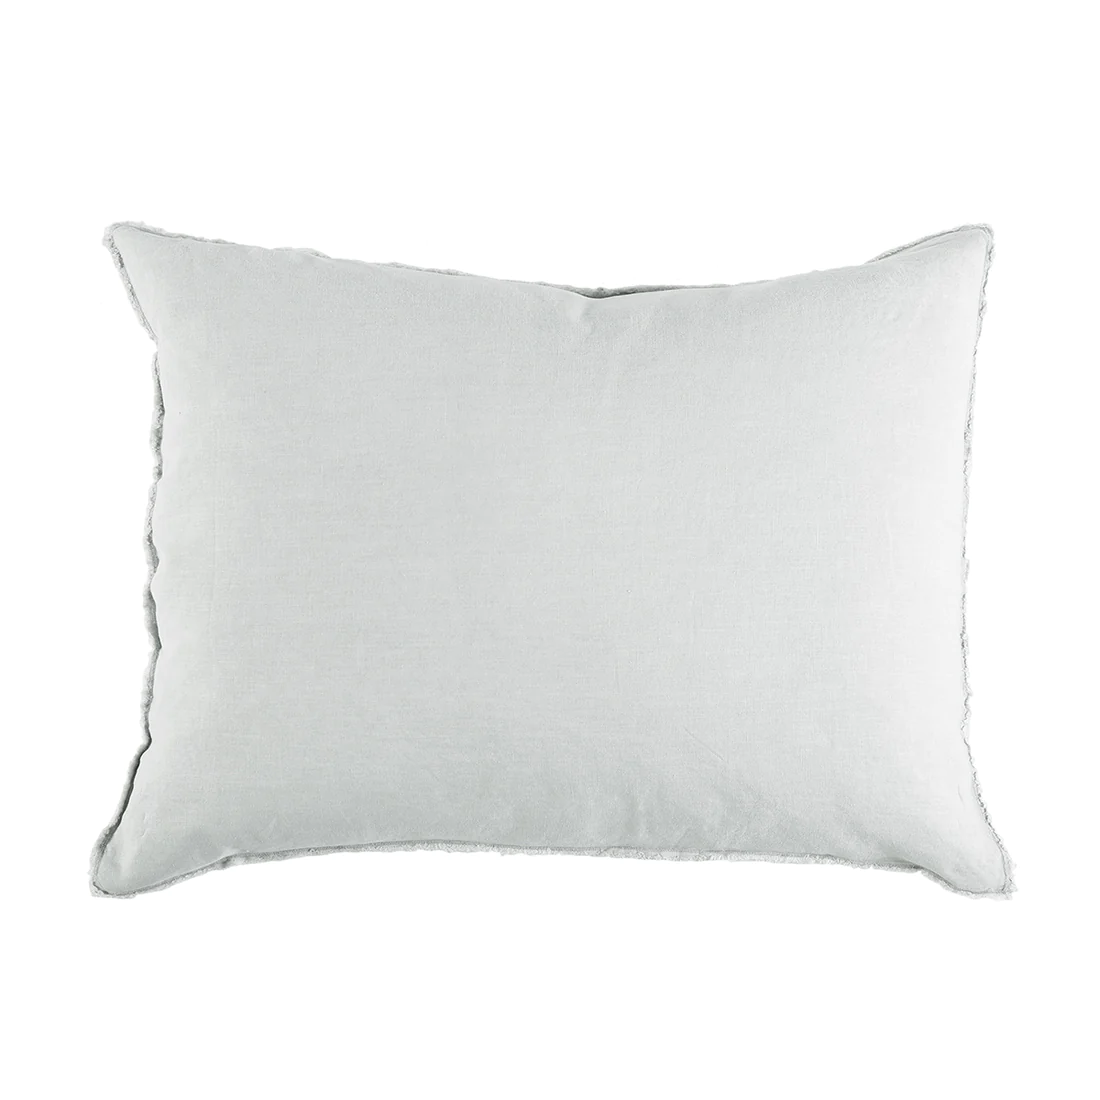 neutral throw pillow